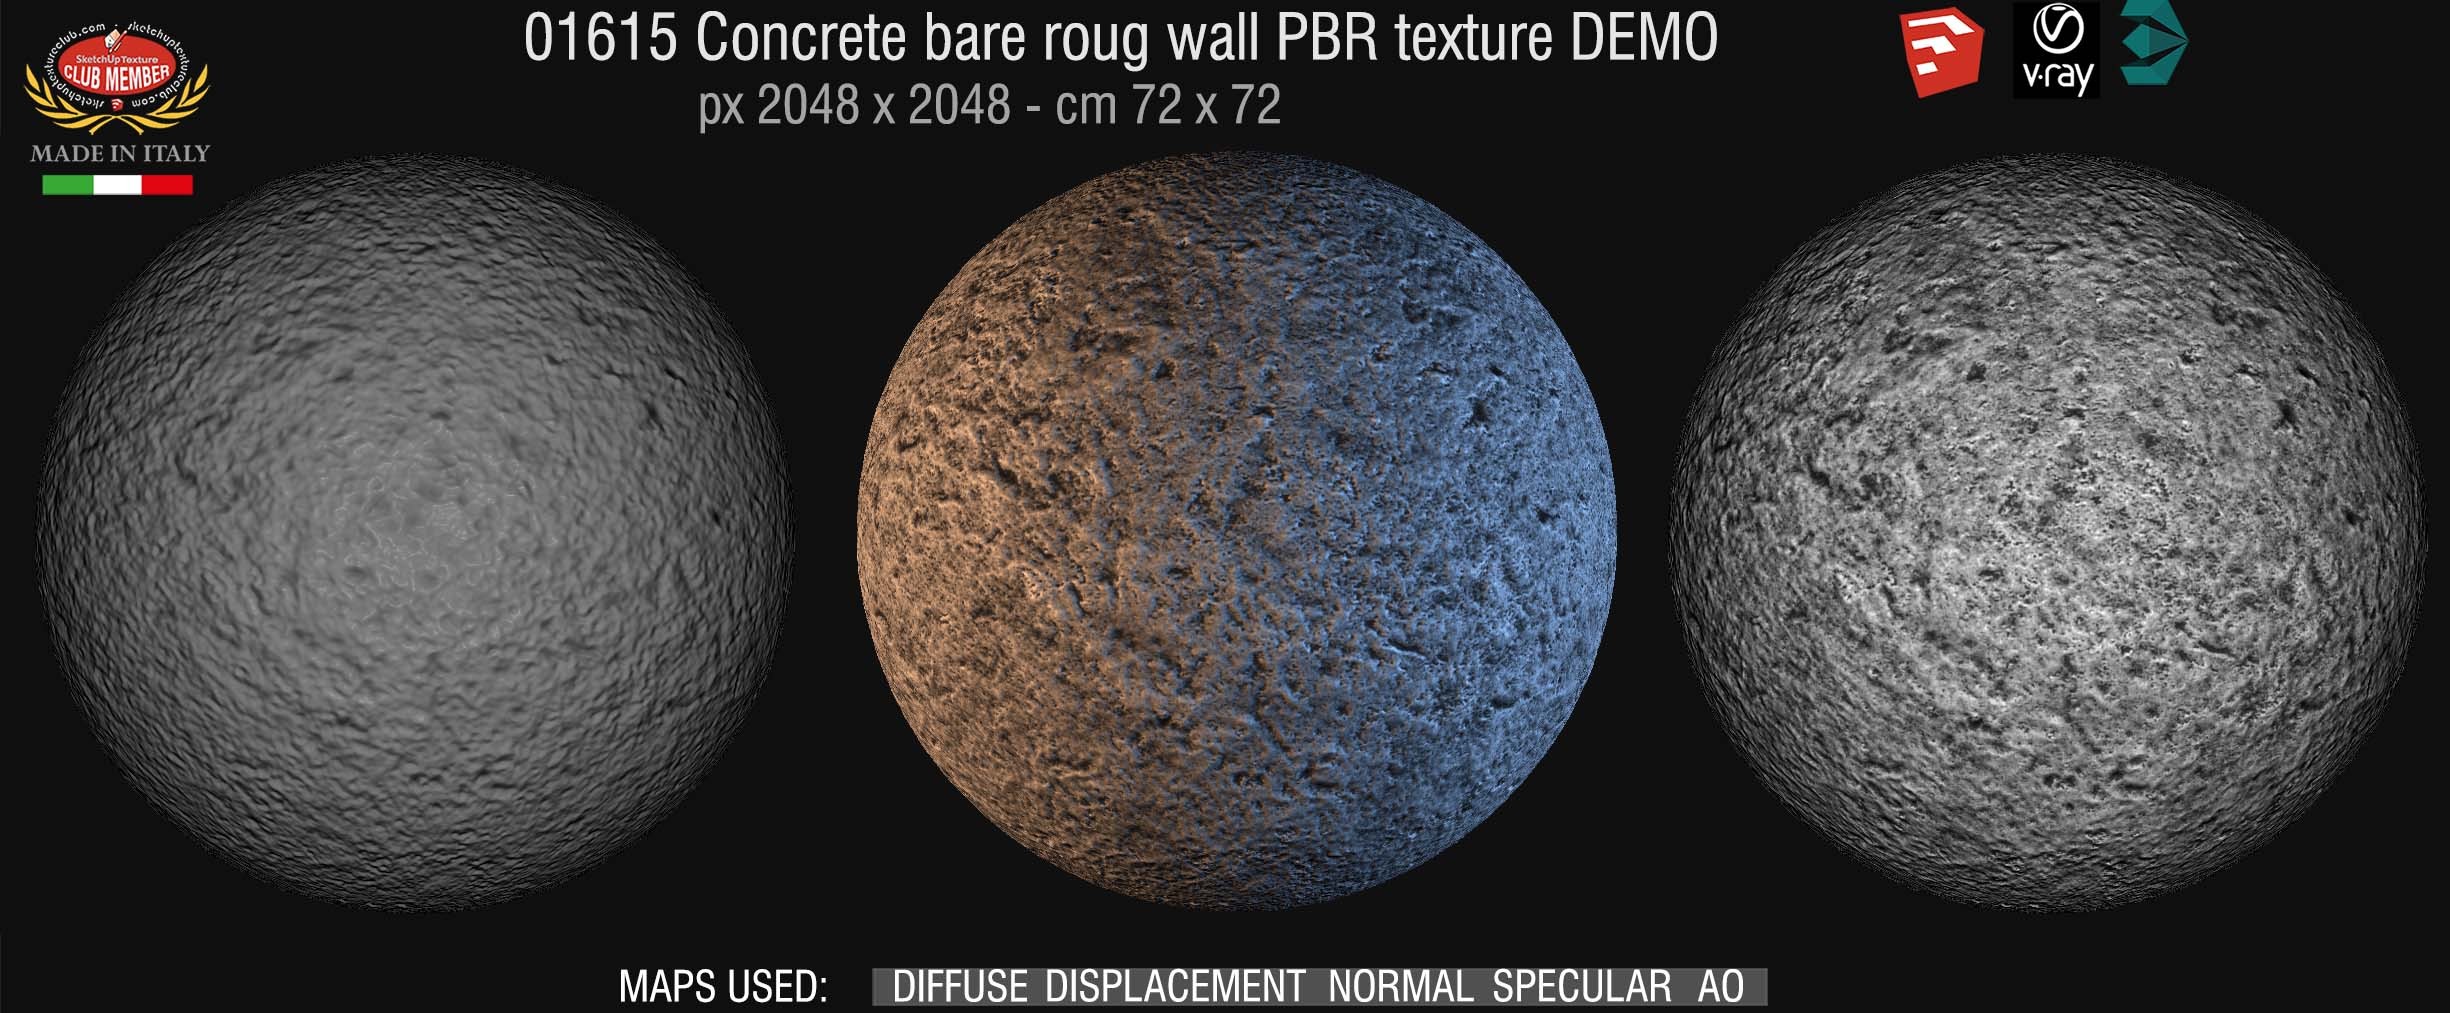 01615 Concrete bare rough wall PBR texture seamless DEMO